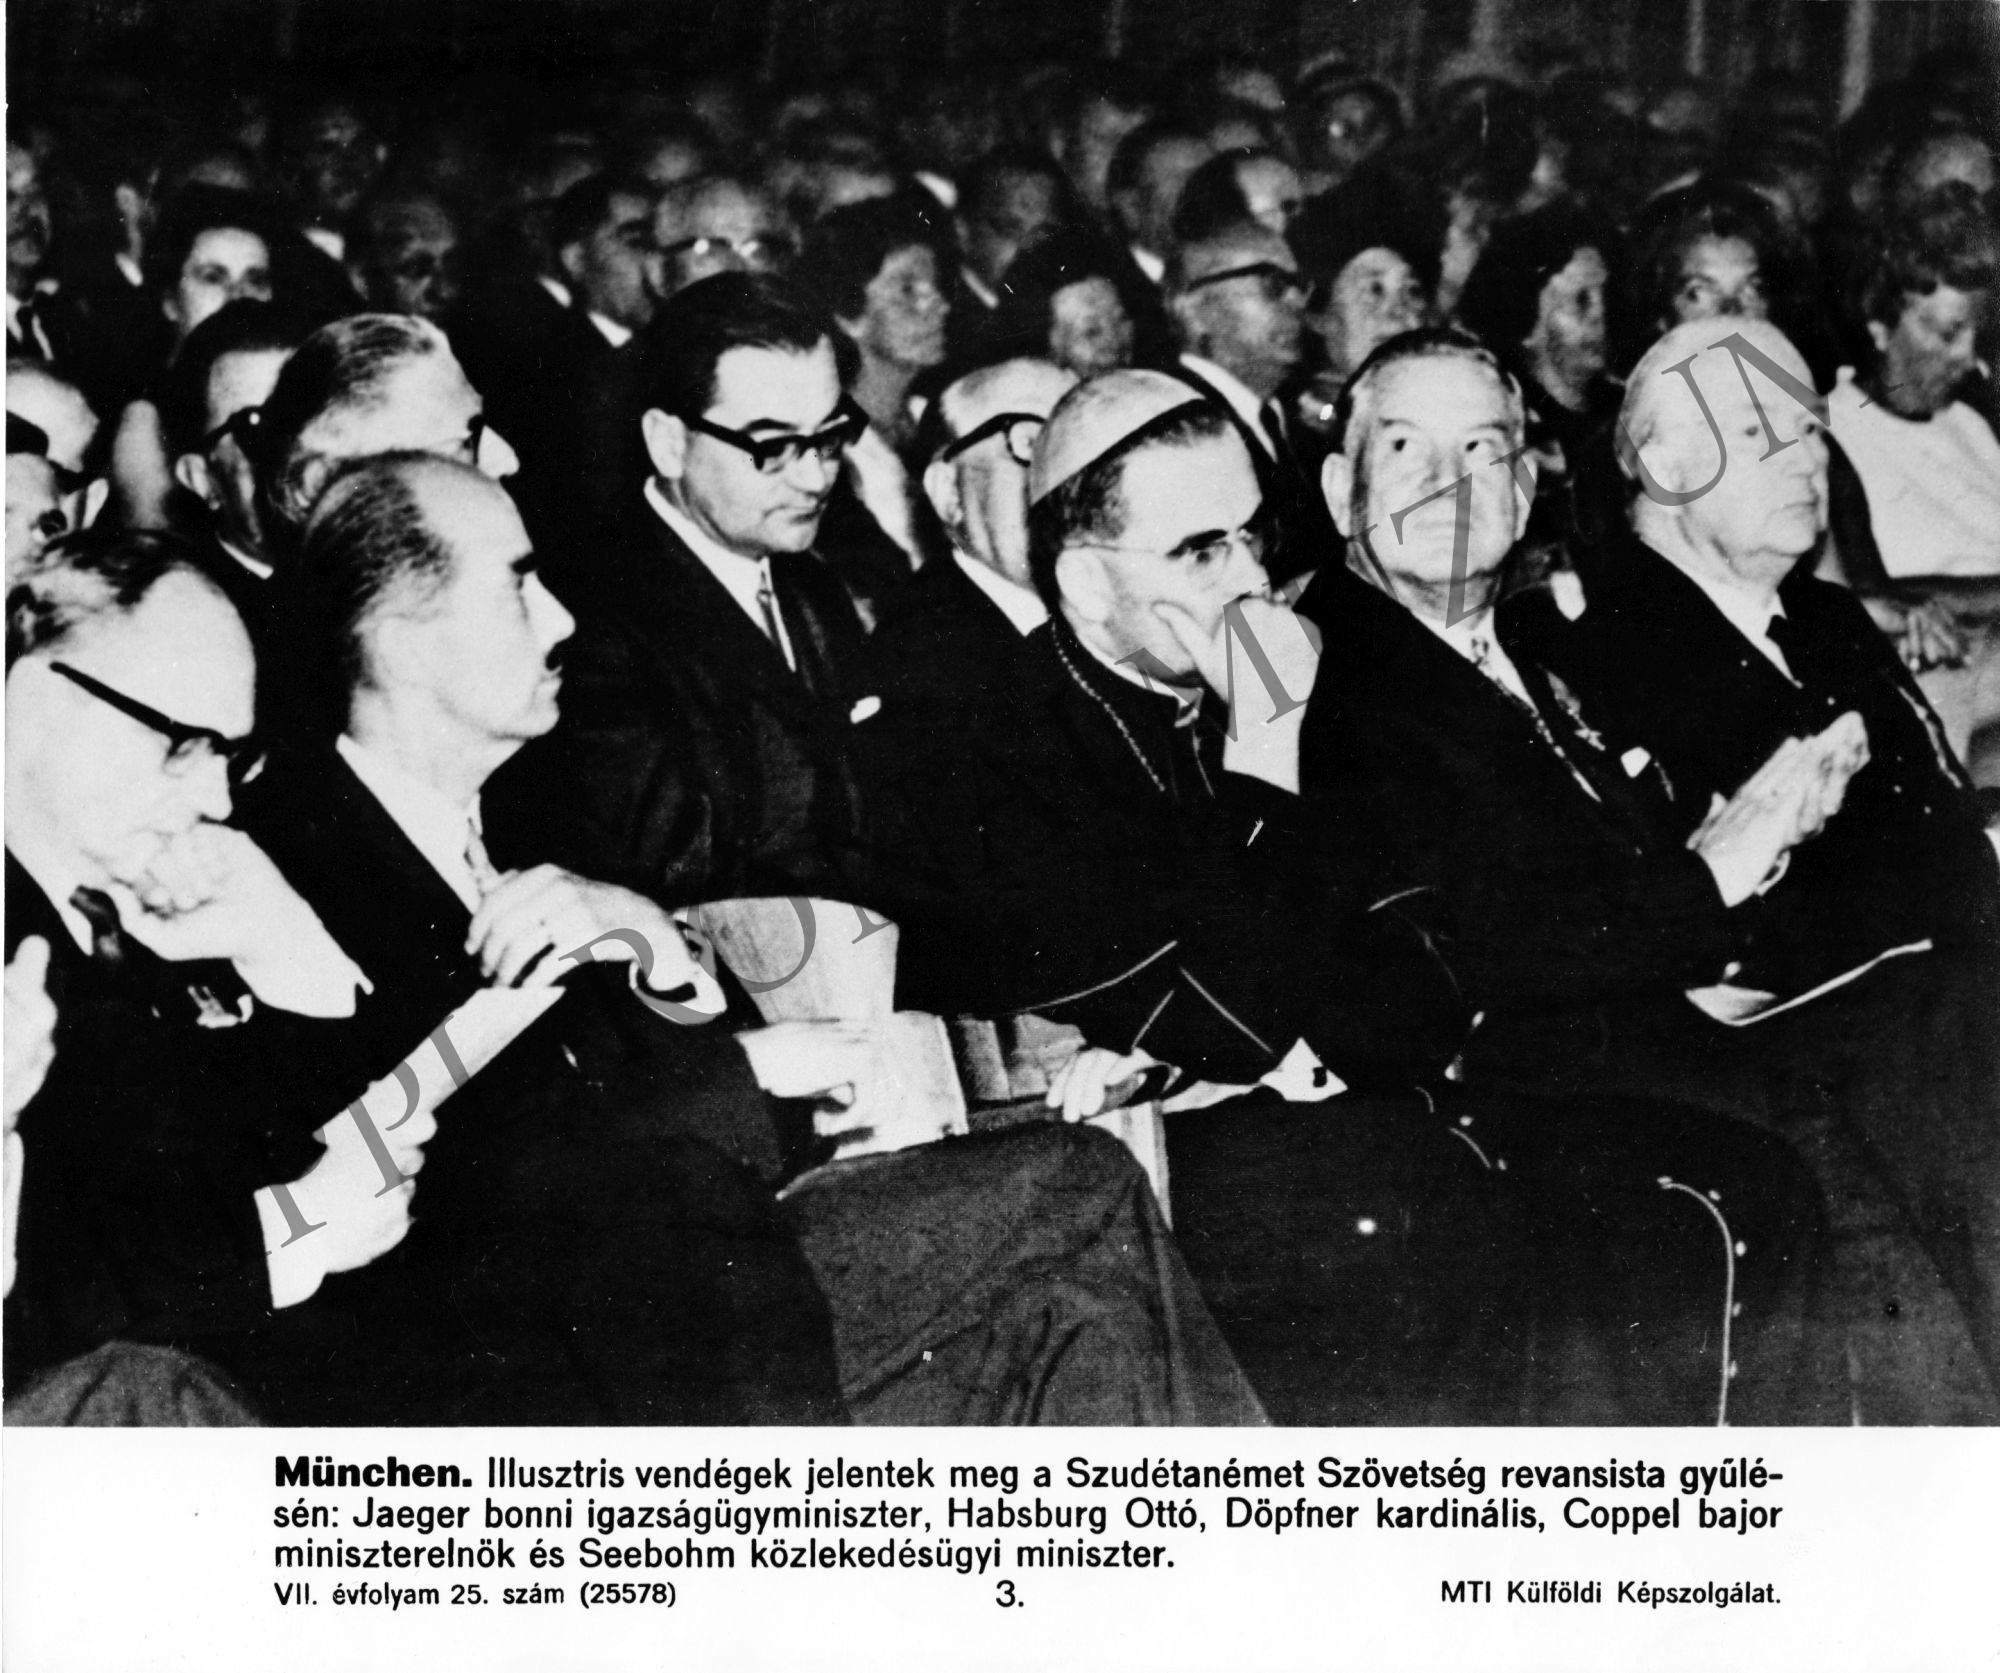 A Szudétanémet Szövetség revansista gyűlése. (Rippl-Rónai Múzeum CC BY-NC-SA)